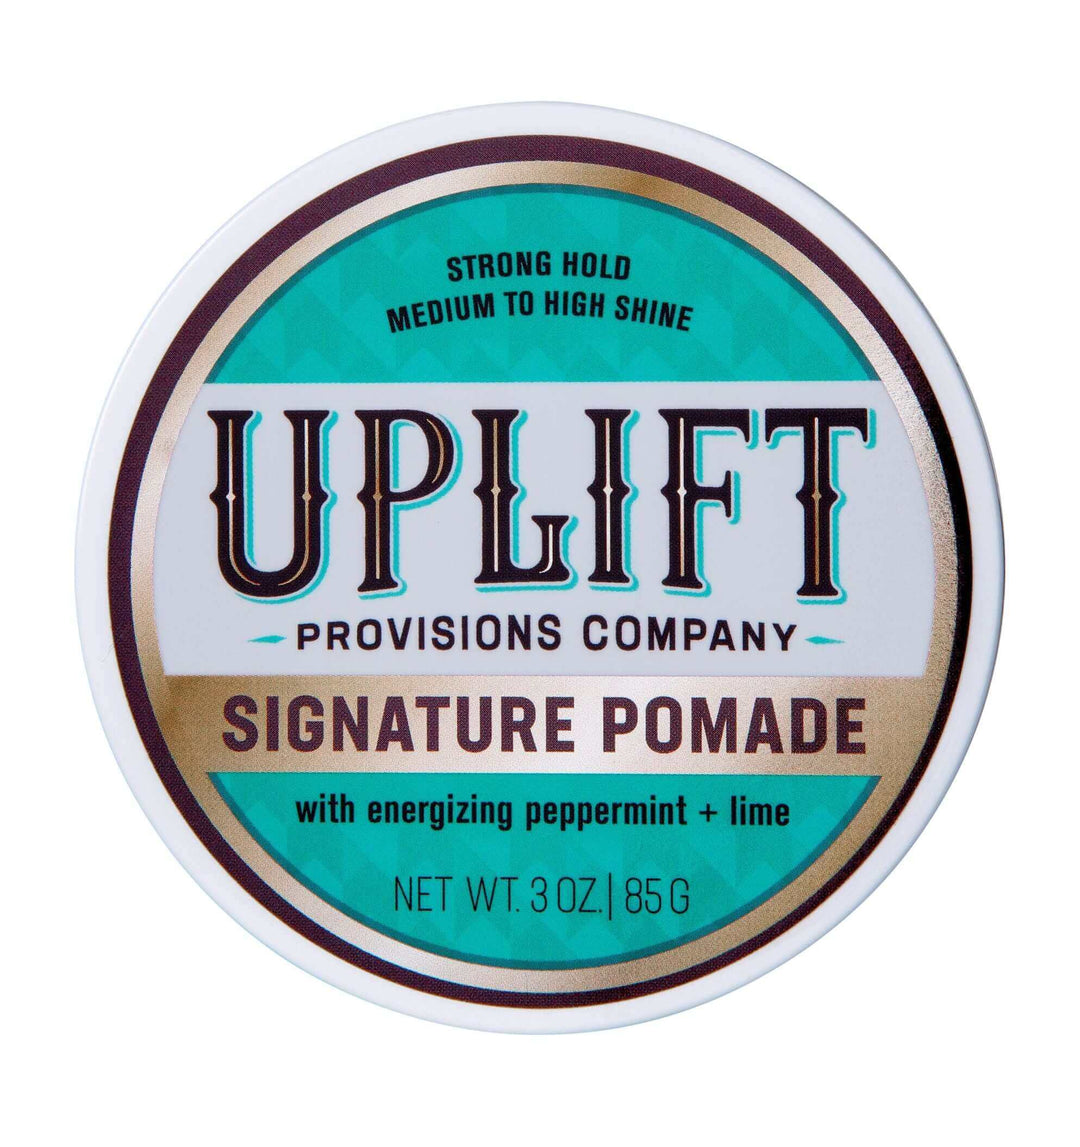 Signature Pomade  Uplift Provisions Company